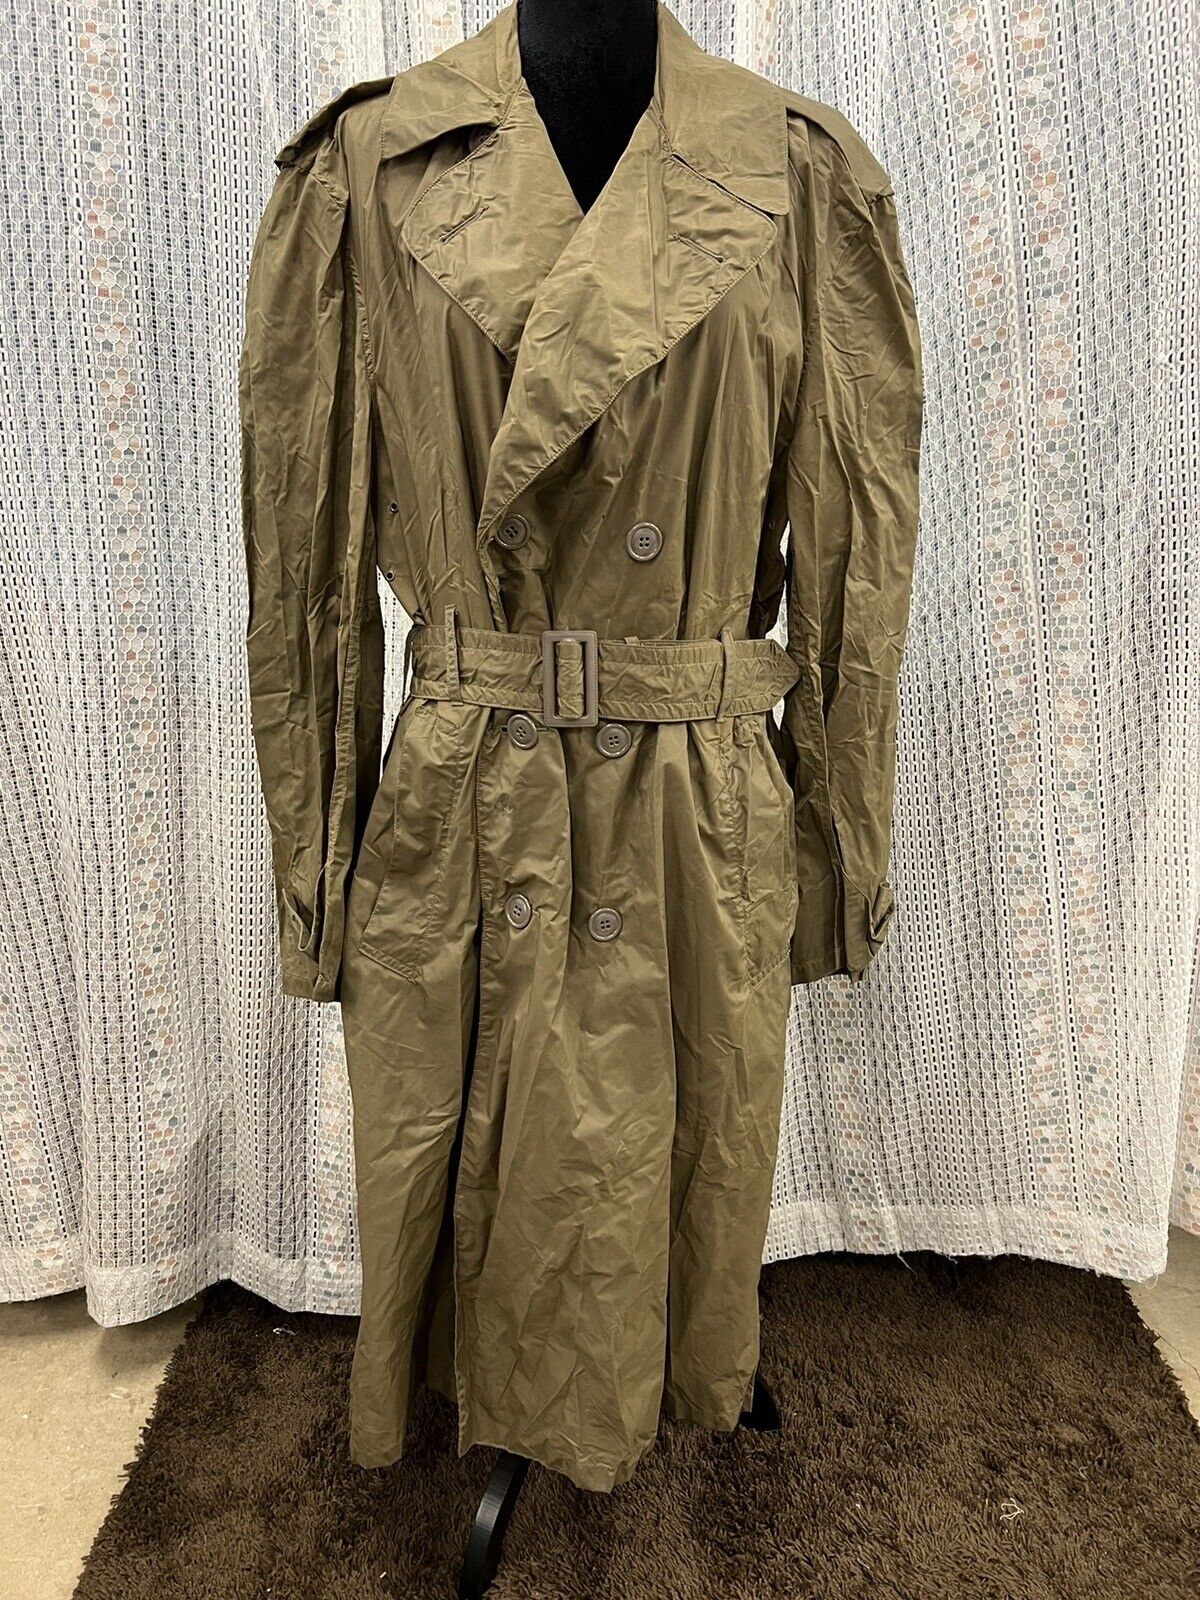 Vintage 1957 US Army Vietnam Era Men's Raincoat Size Reg 40 Taupe 179 with Belt